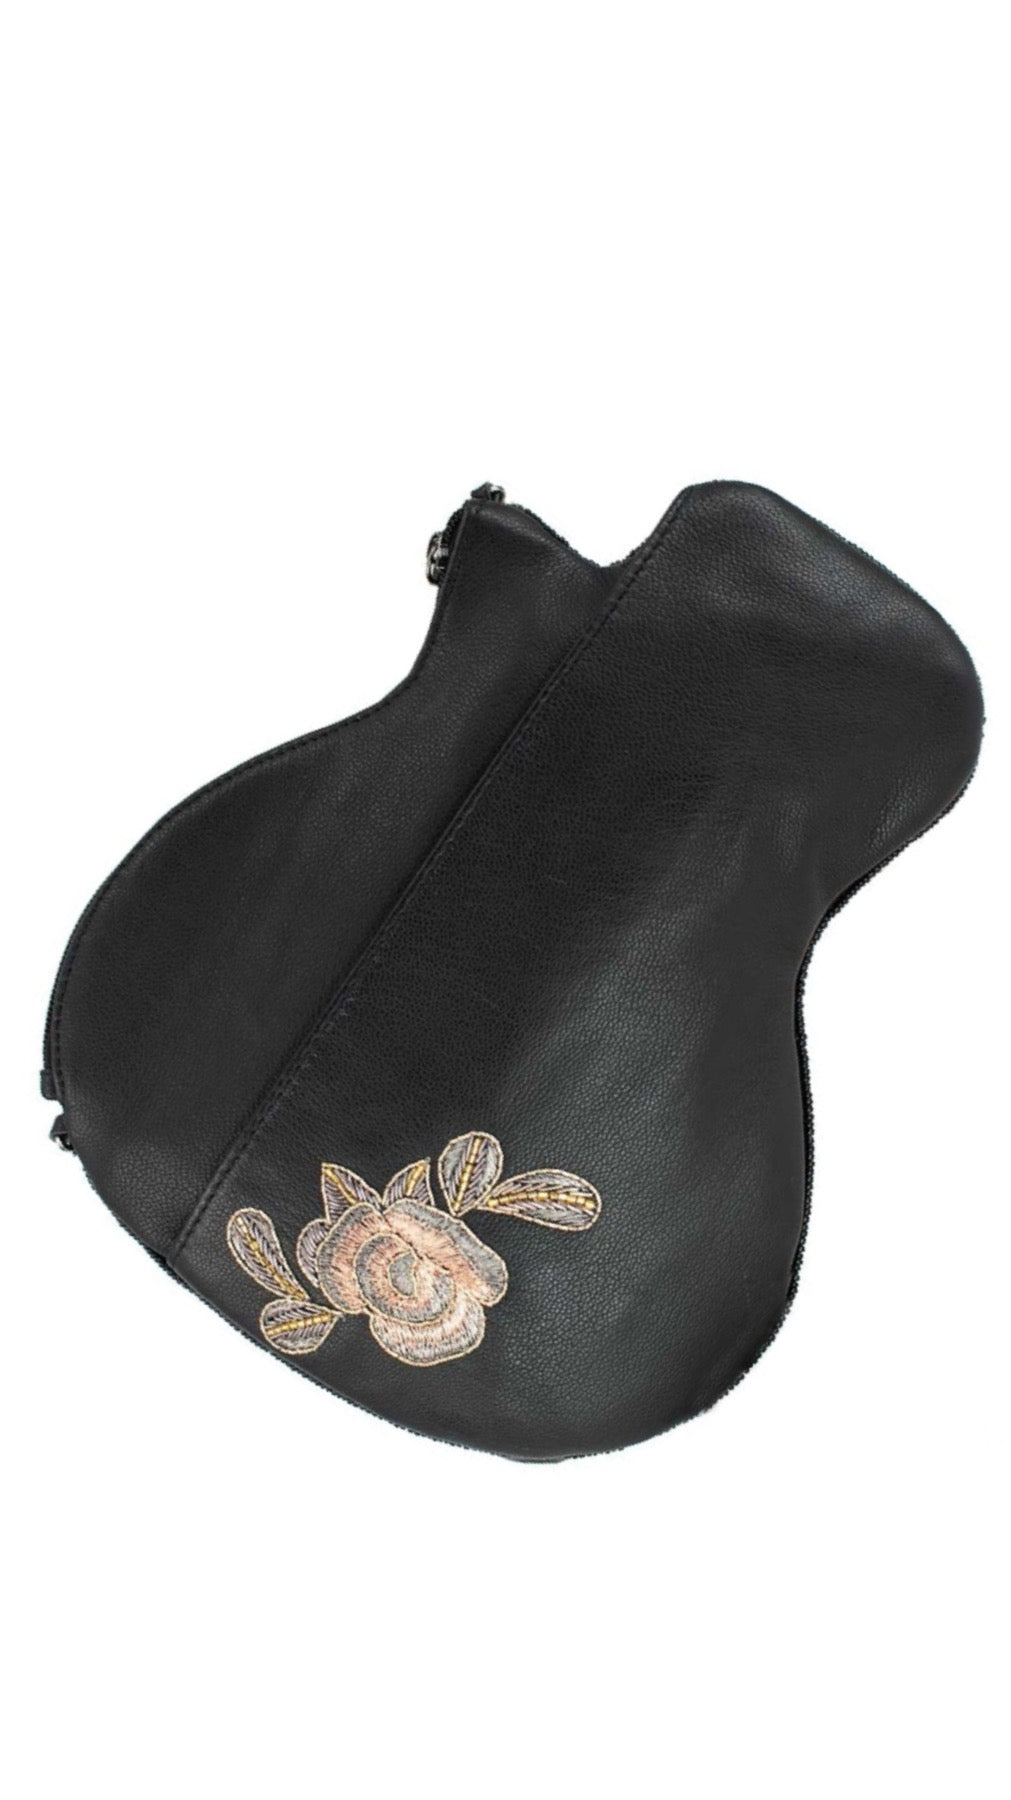 Mary Frances Pretty Music Guitar Handbag   Mary Frances Beaded Bag